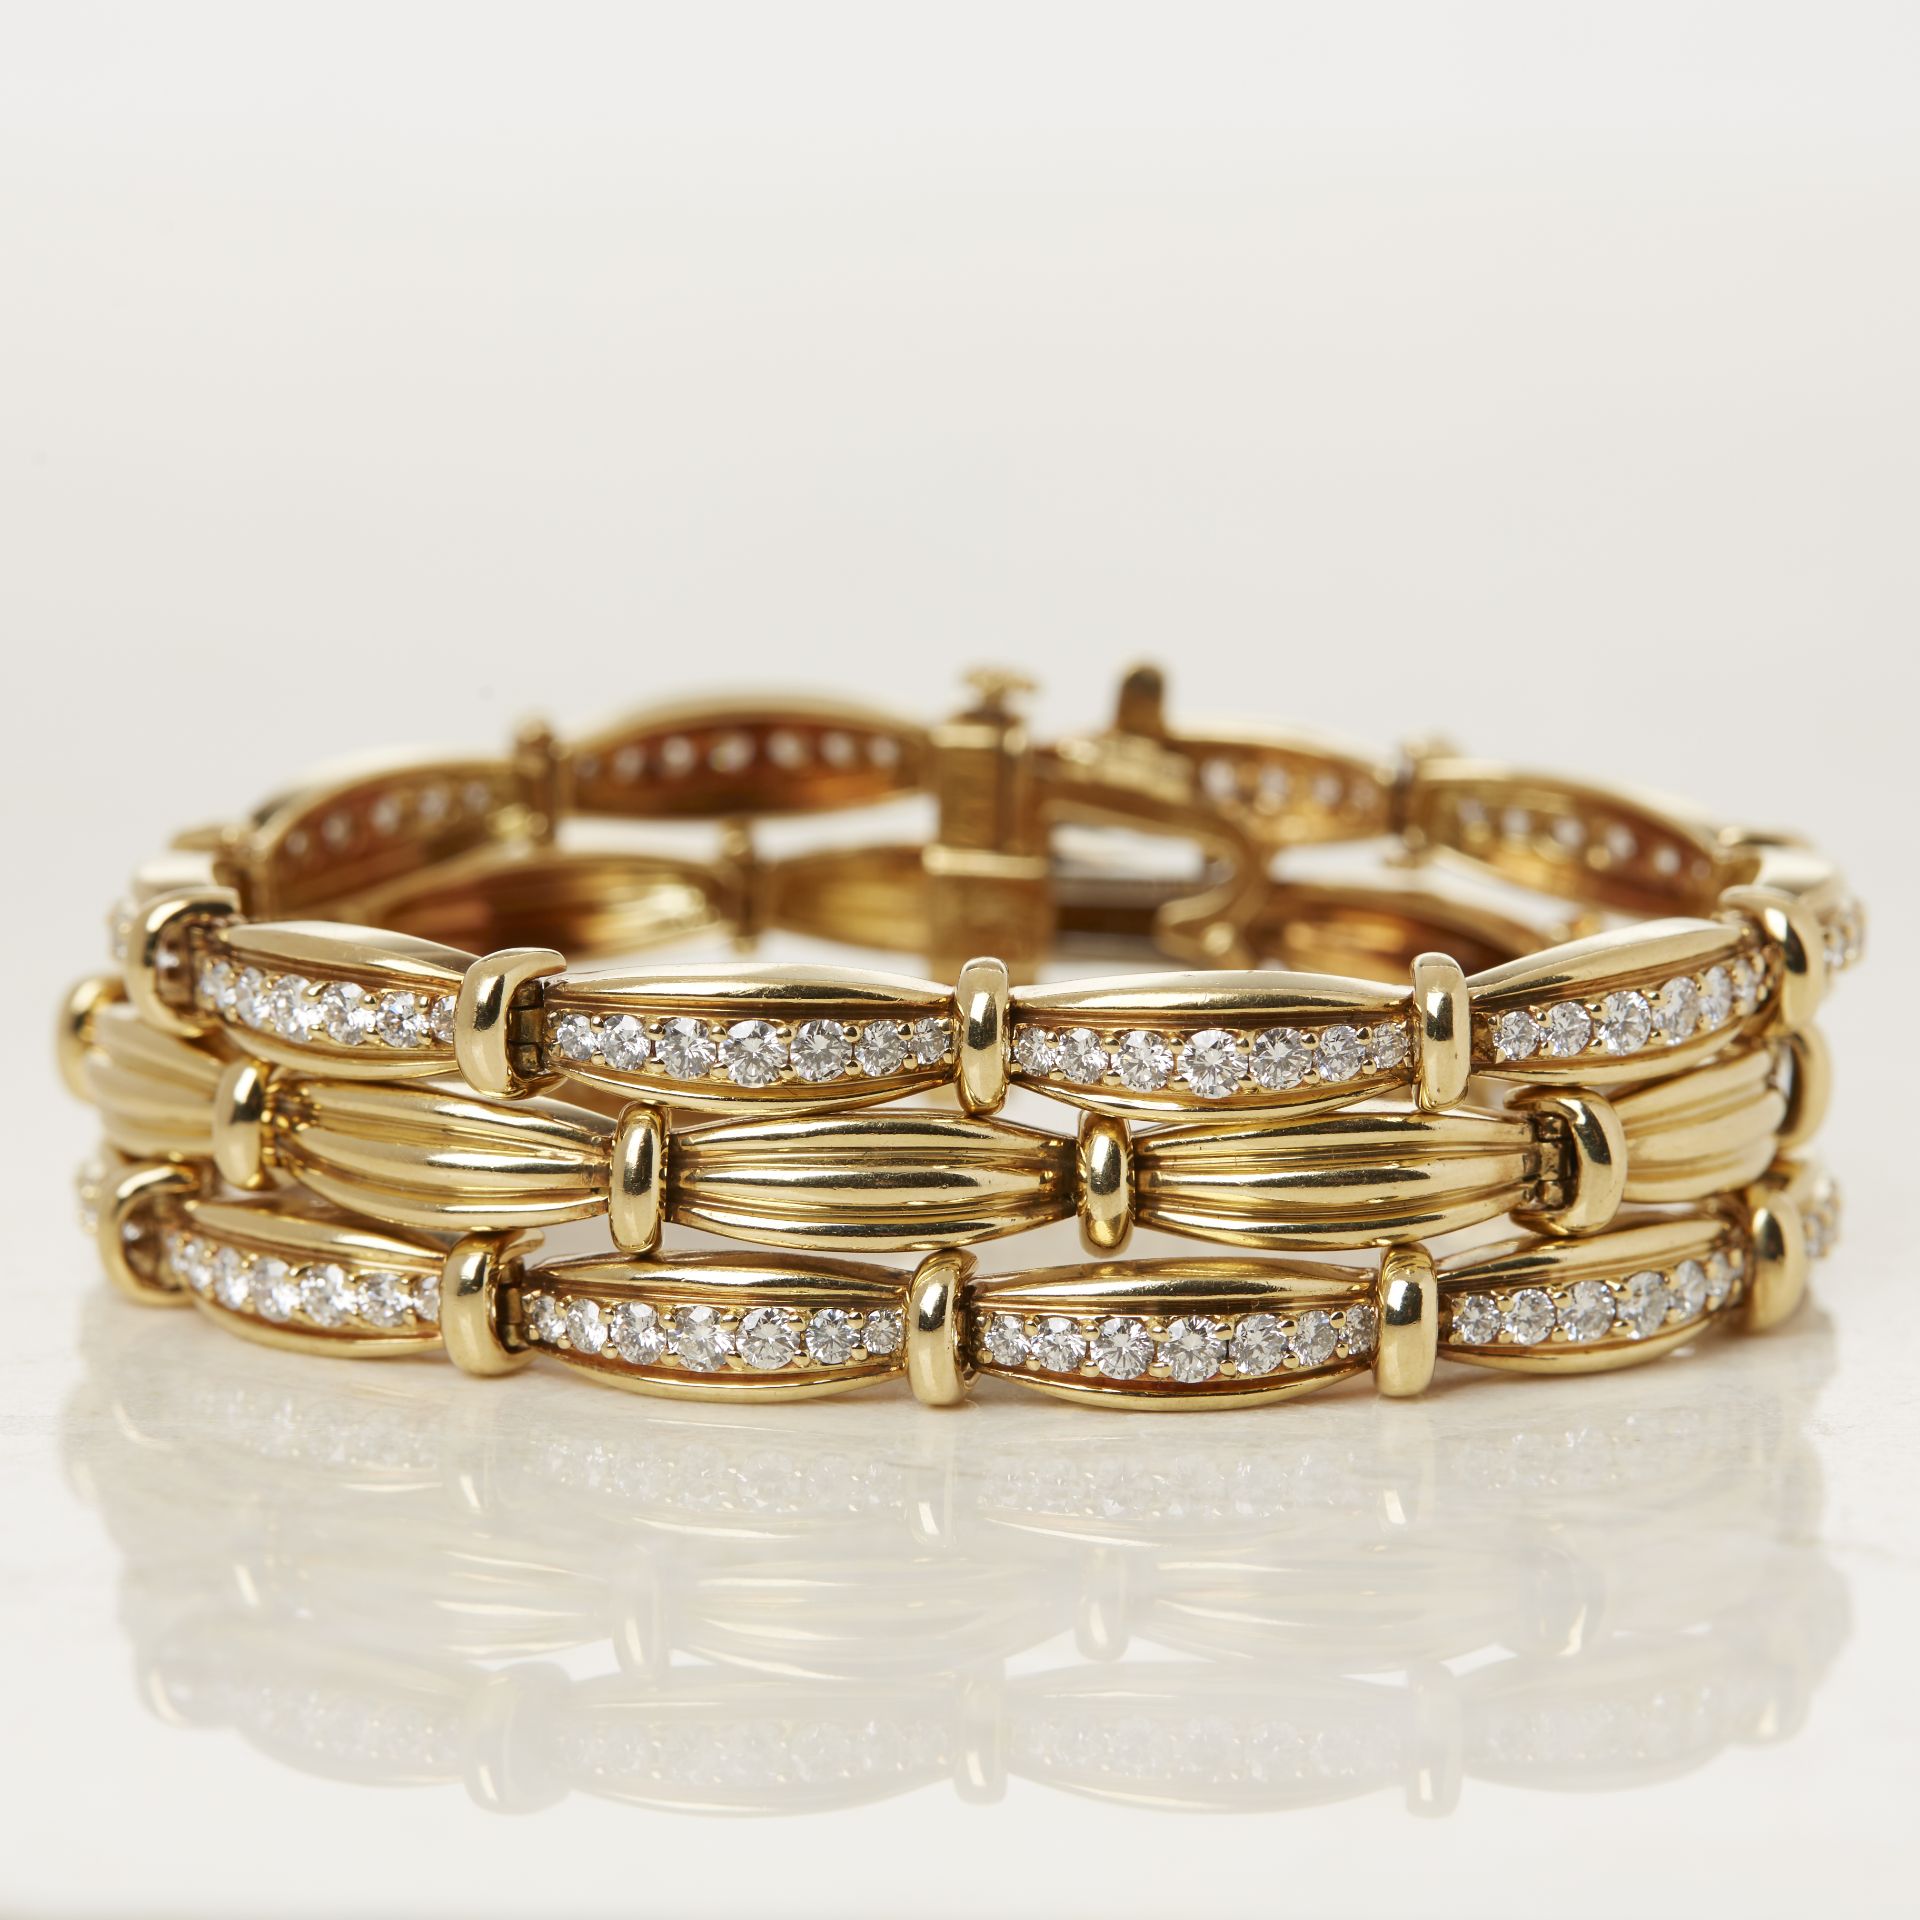 Tiffany & Co. 18k Yellow Gold Diamond Three Strand Vintage Bracelet with Presentation Box - Image 3 of 17